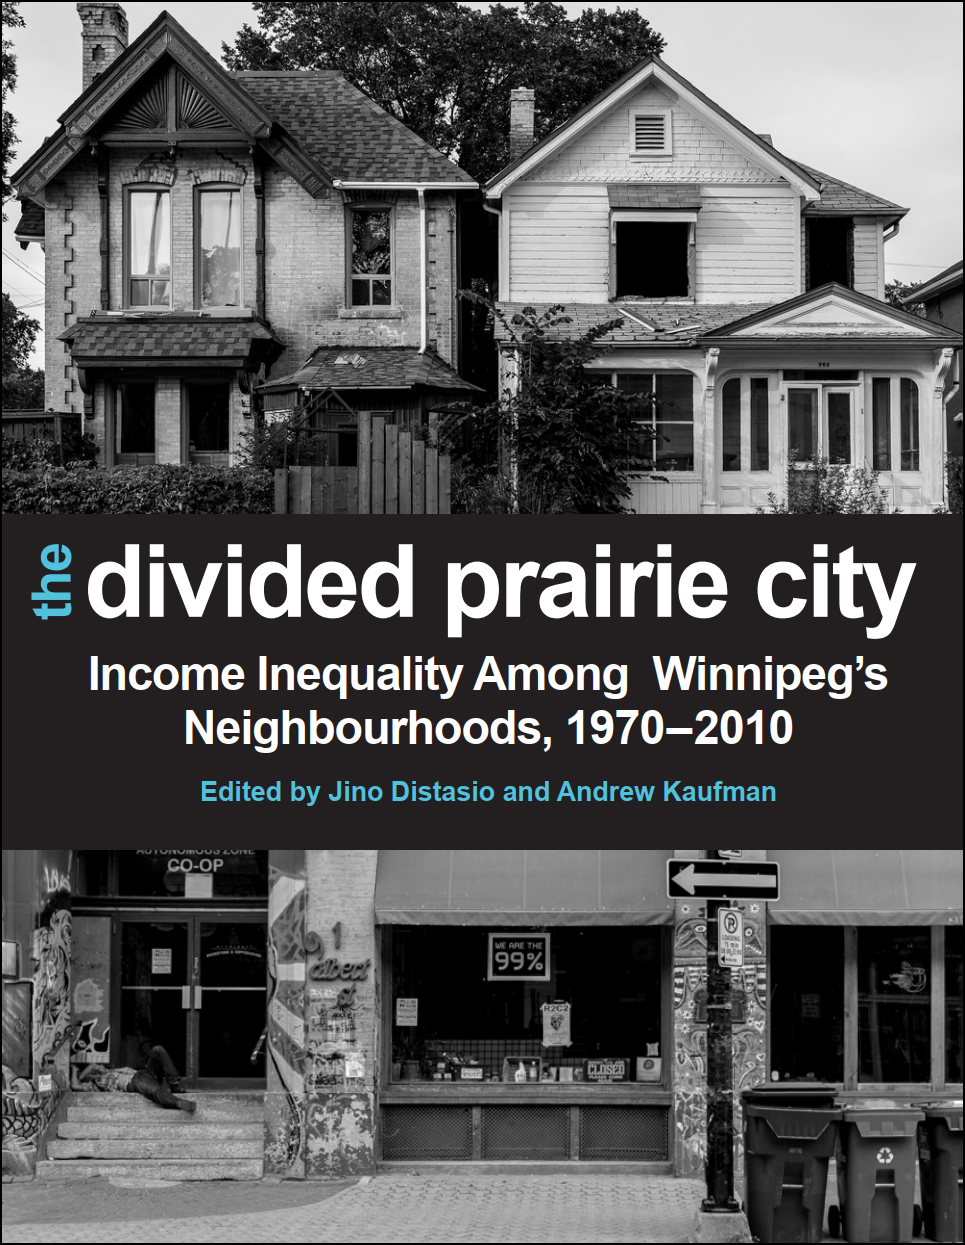 The Divided Prairie City